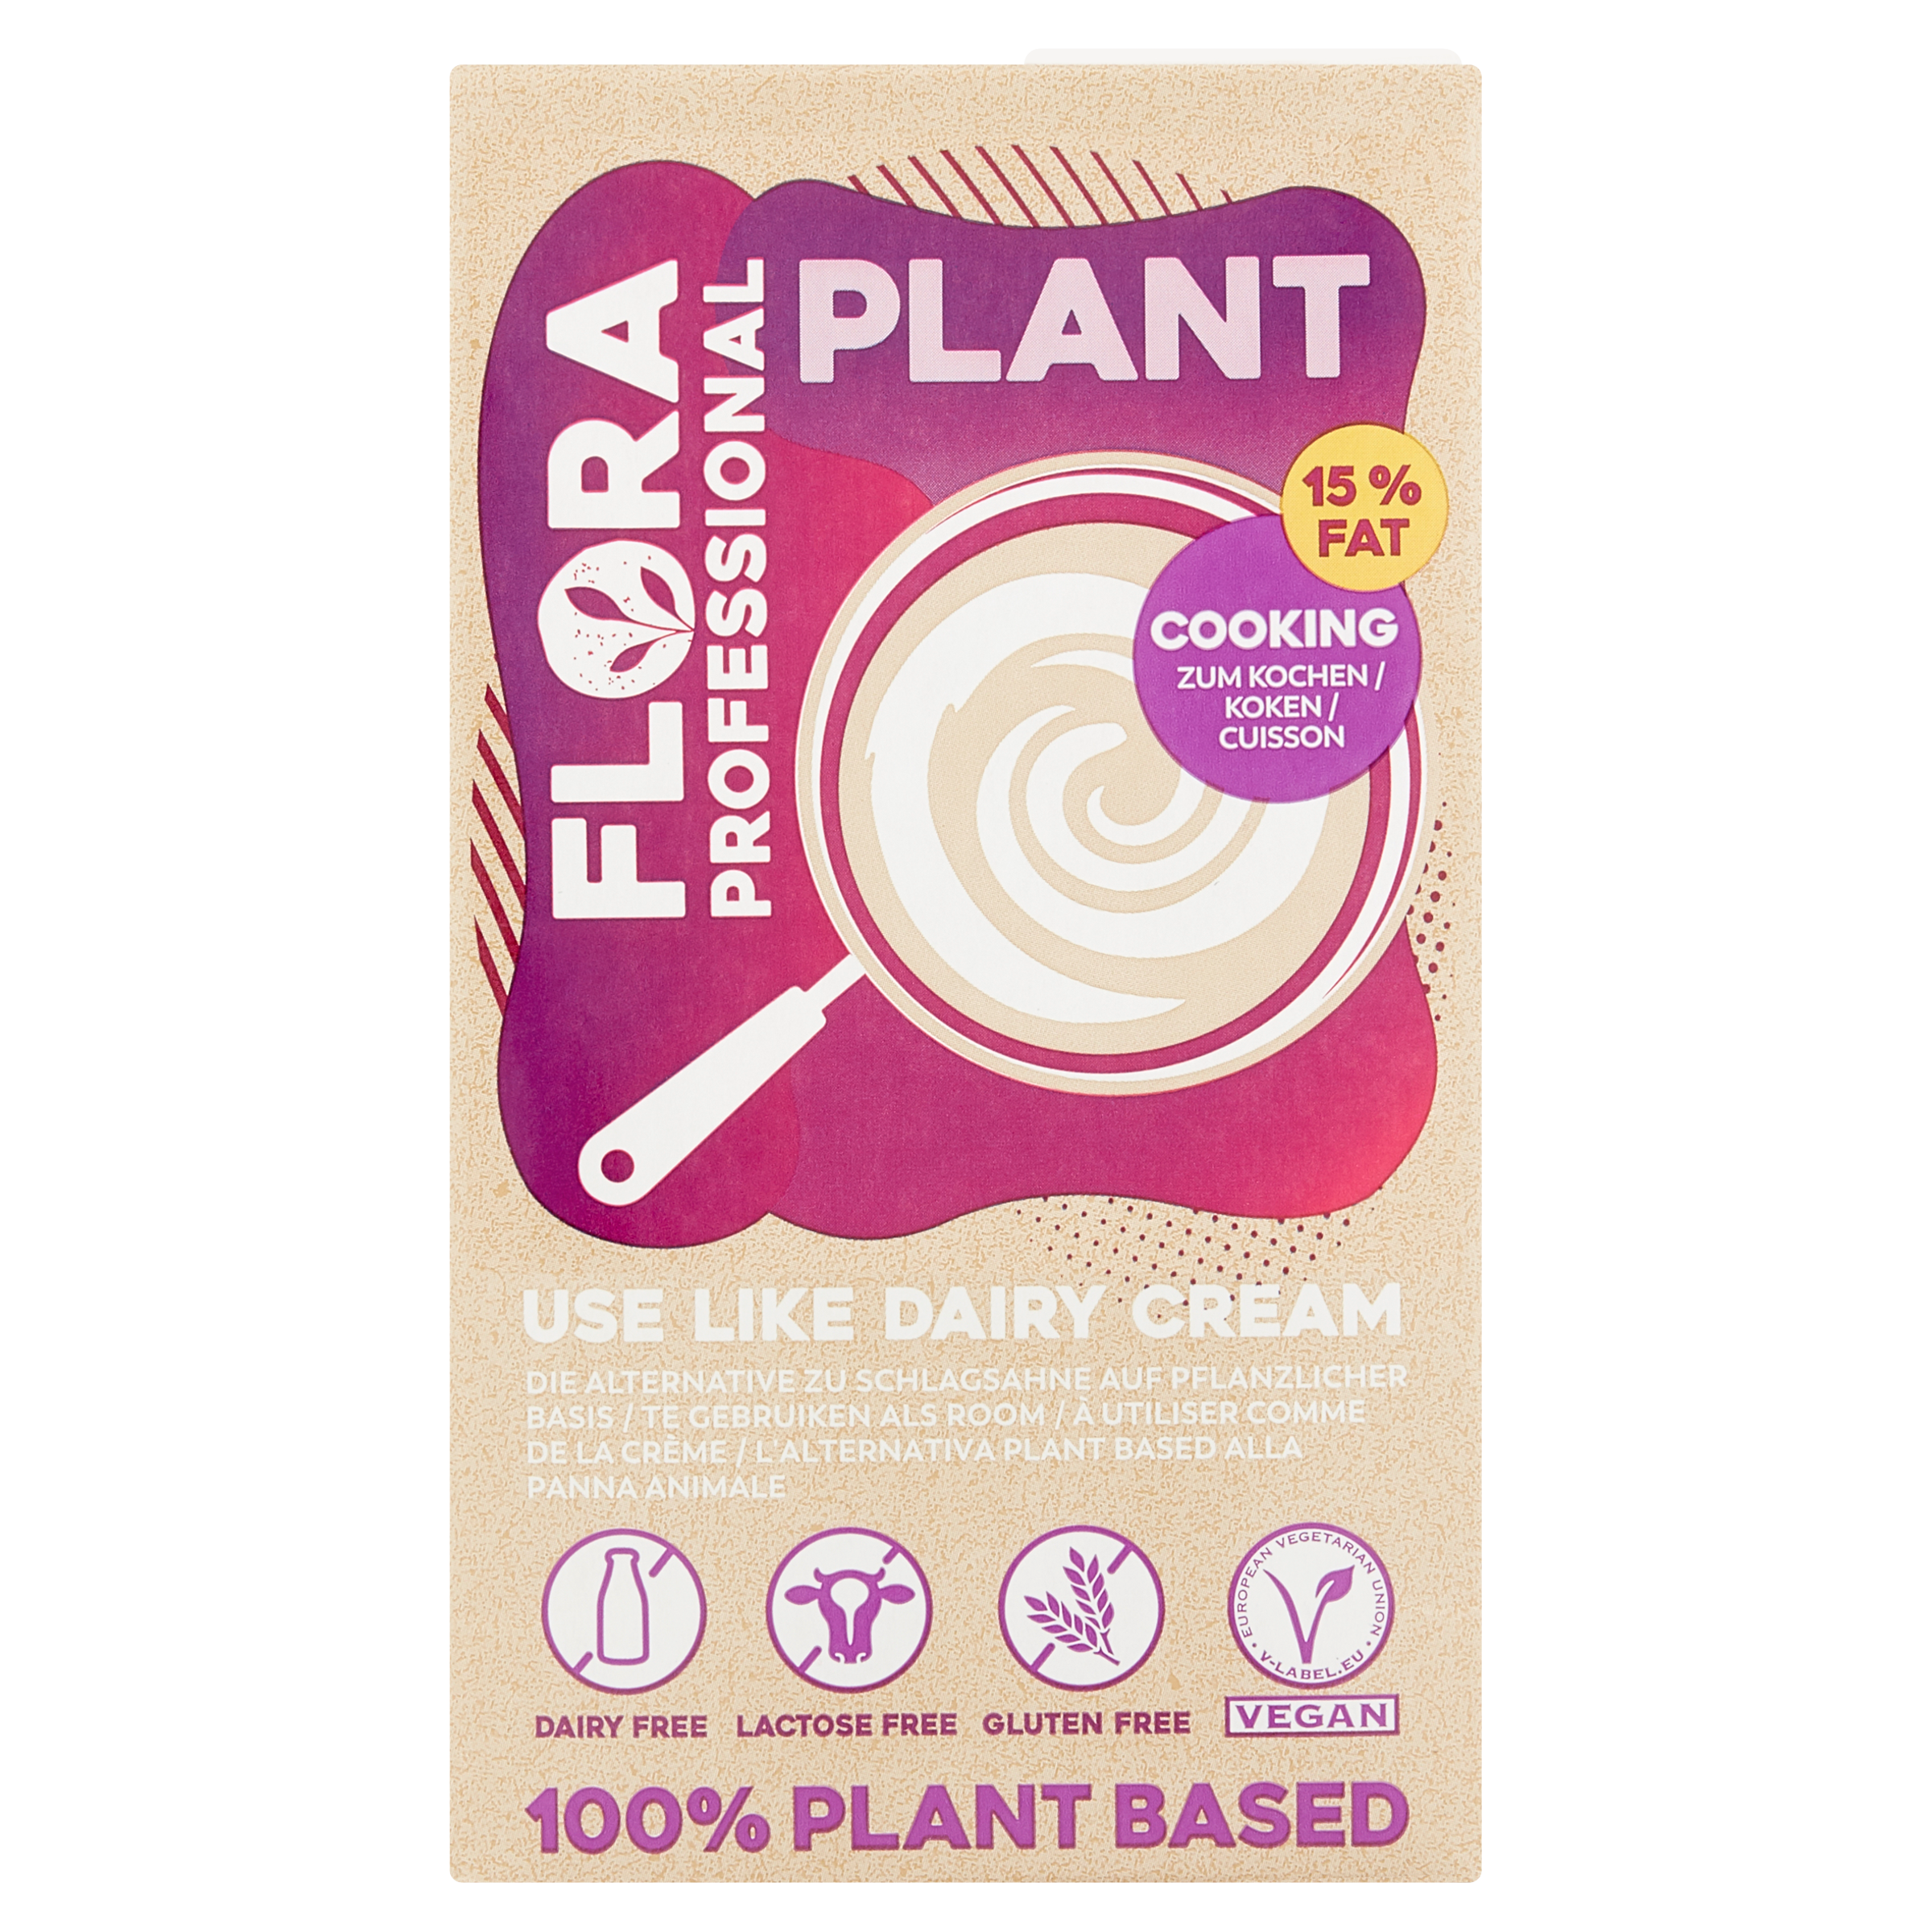 Flora Professional Plant 15% Cooking - 1L 